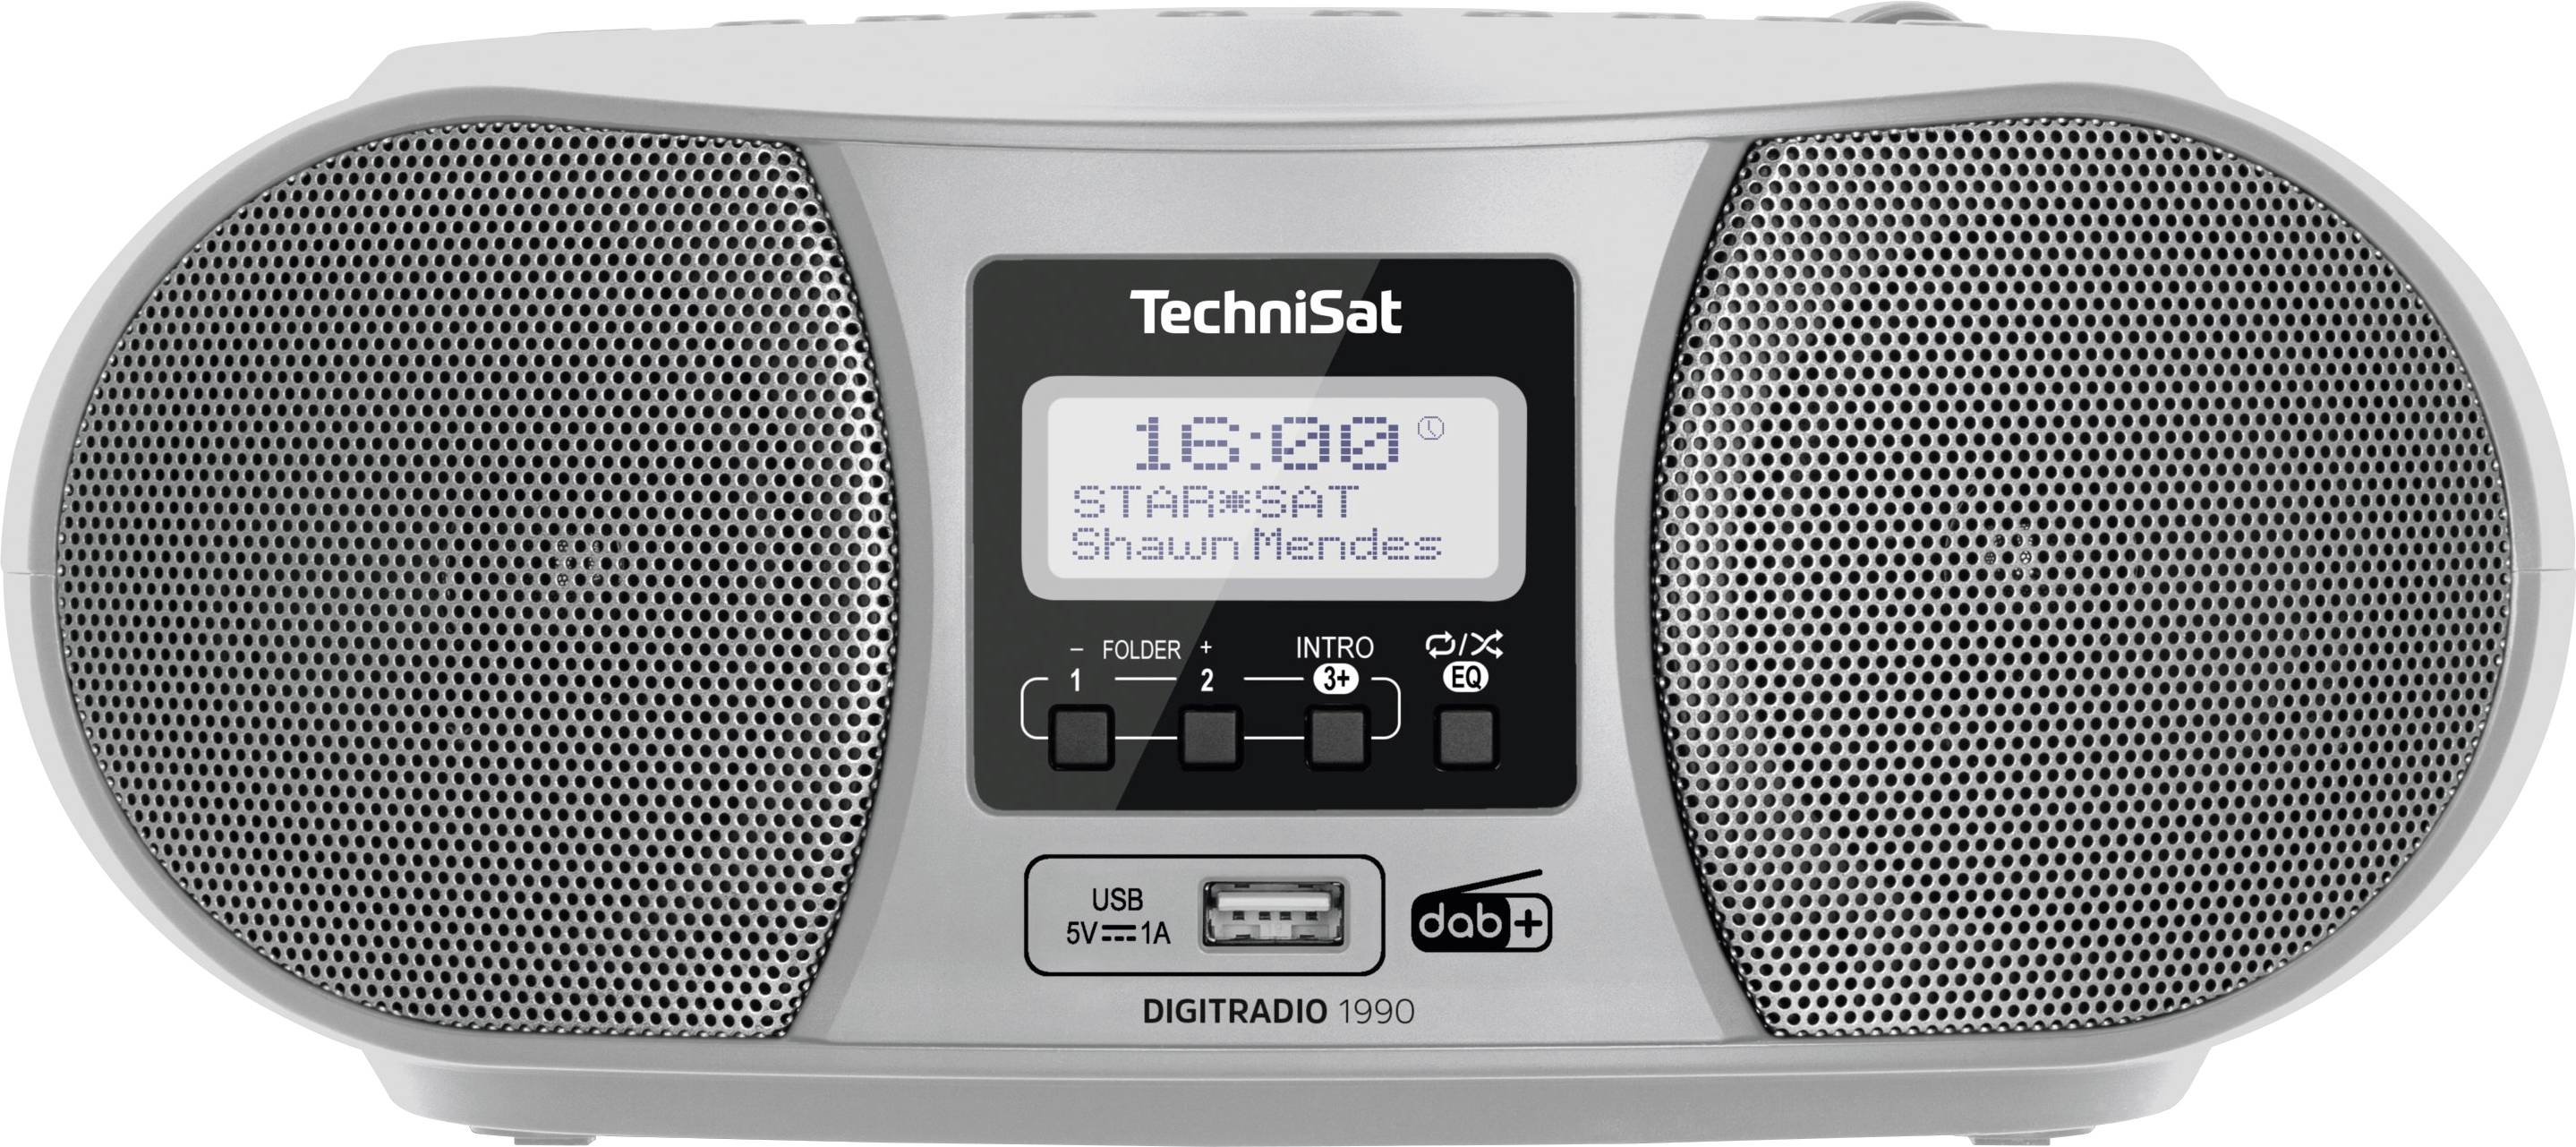 kaufen TechniSat Silber CD-Radio Bluetooth®, DAB+, UKW AUX, Akku-Ladefunktion, 1990 USB CD, Weckfunktion DIGITRADIO